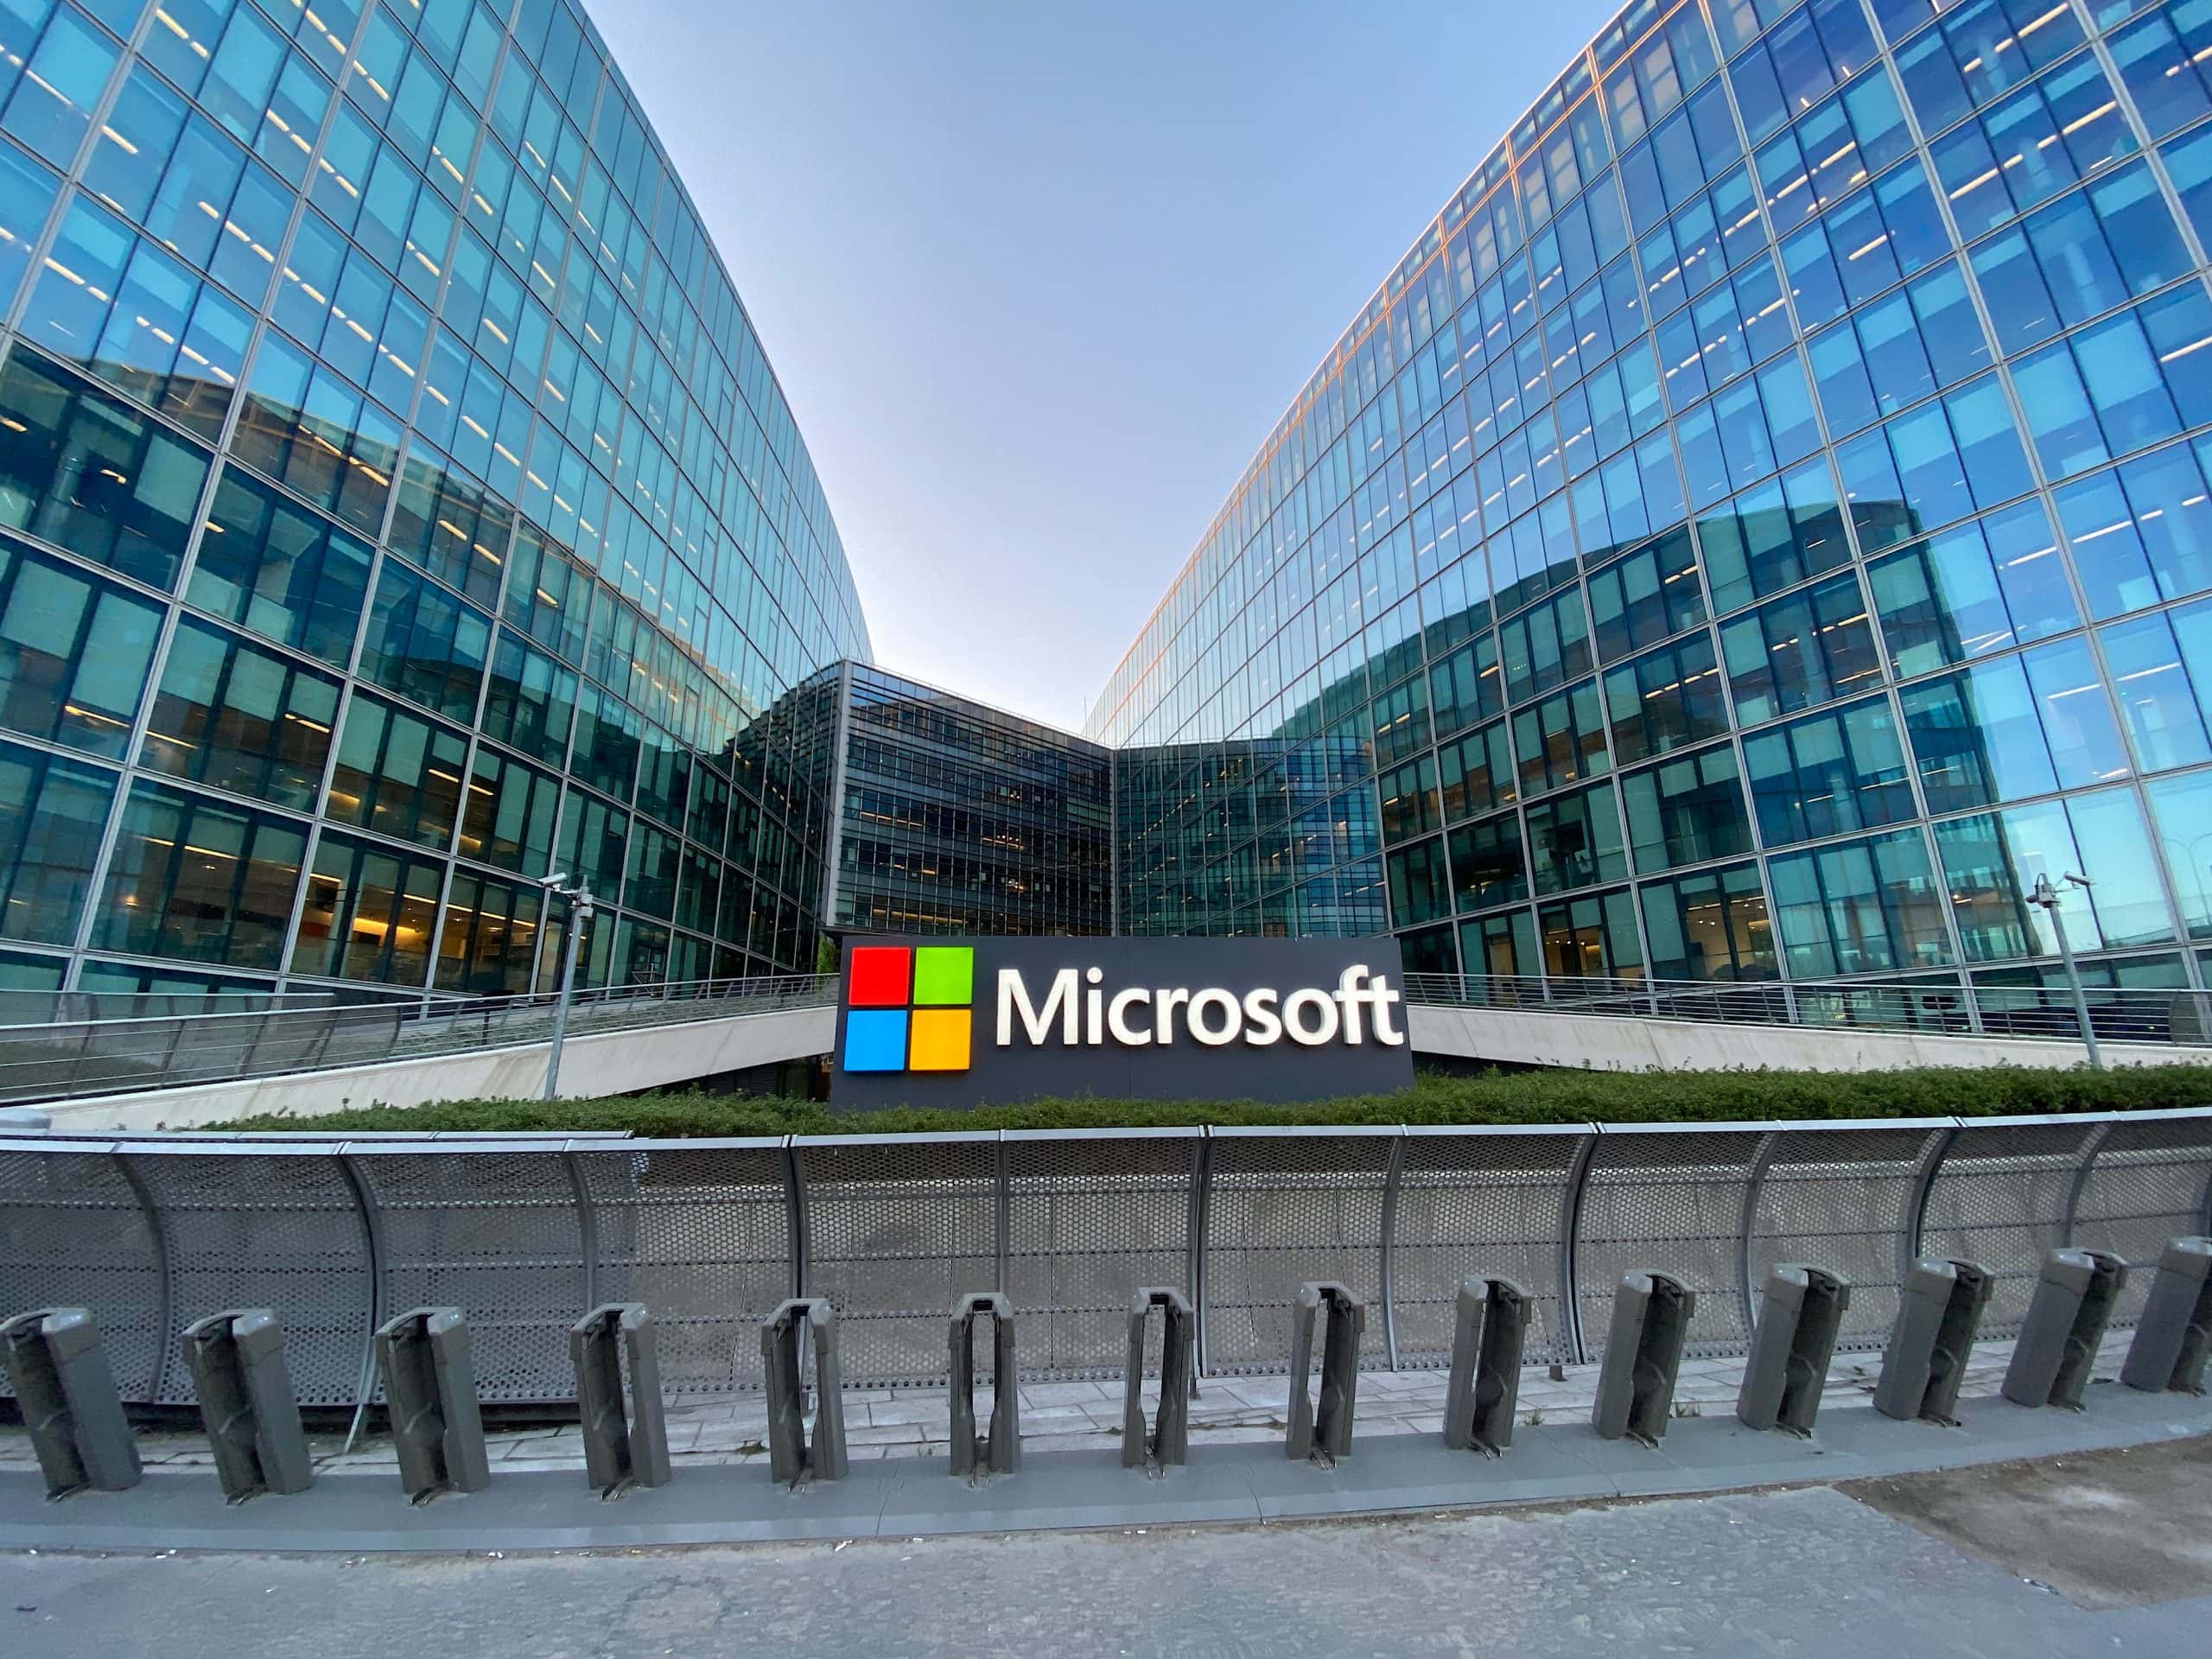 “Gateway to the Metaverse”: Microsoft has big plans